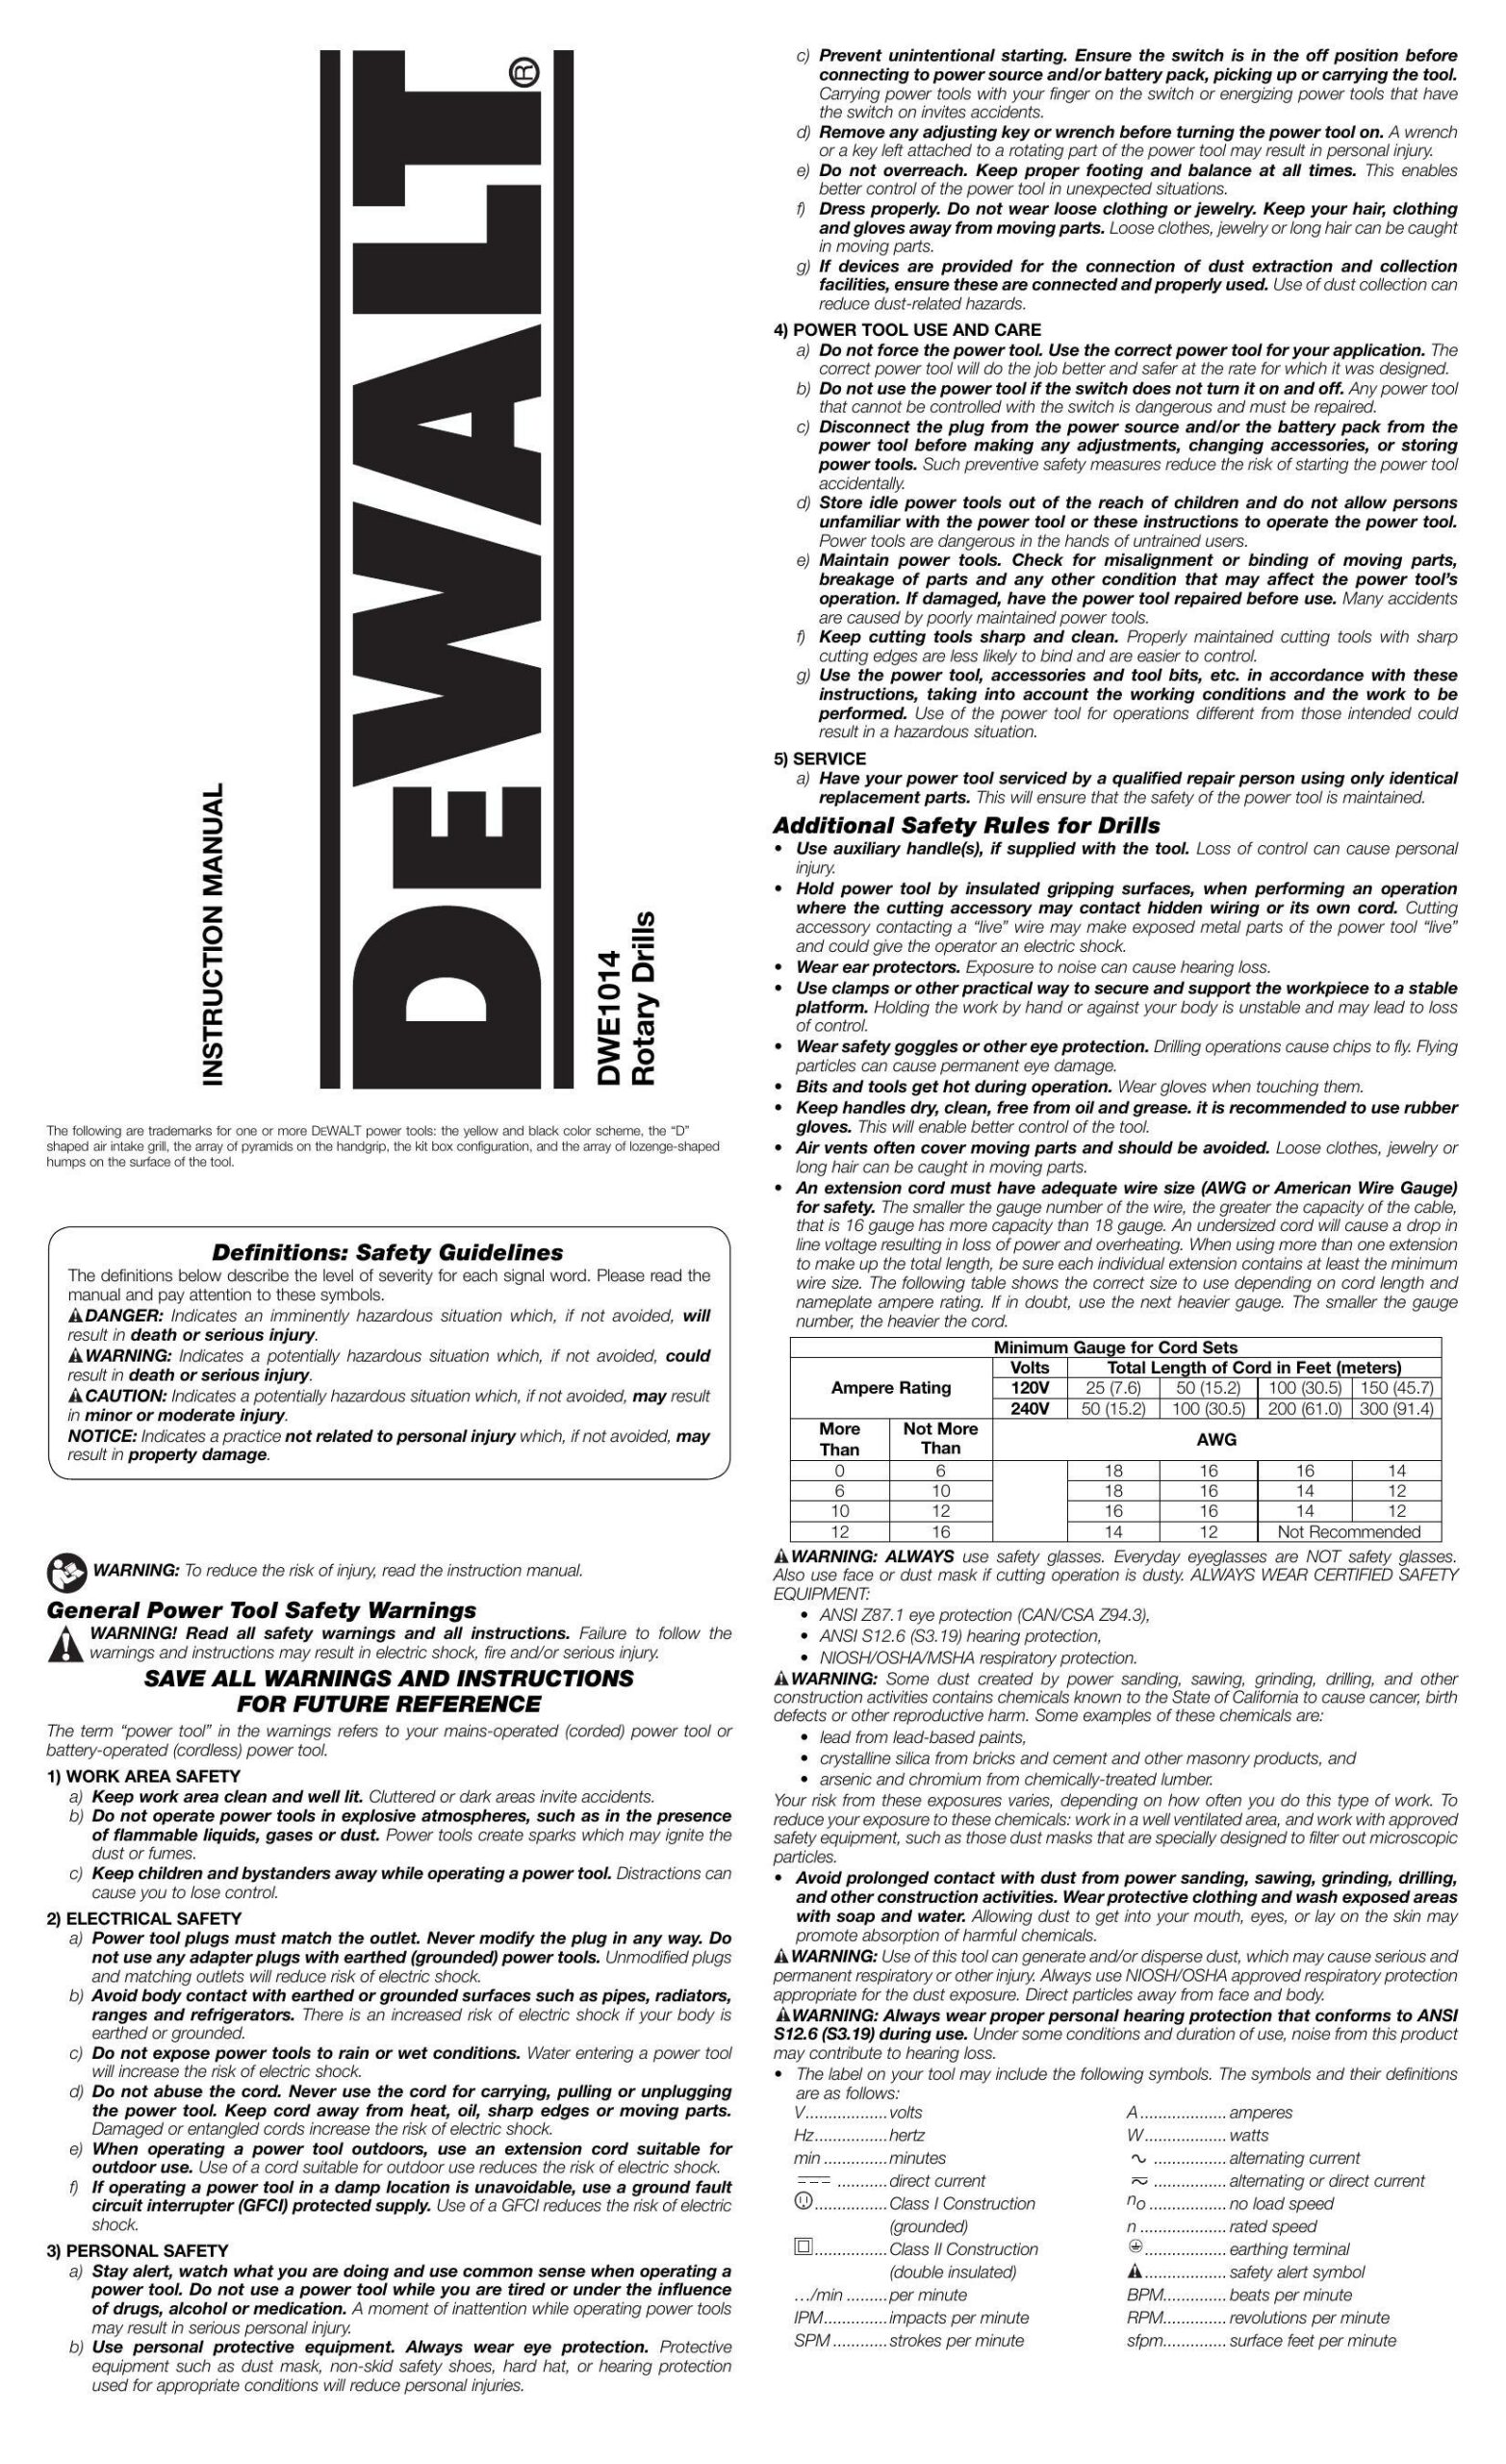 dewalt-dwe1014-heavy-duty-vsr-drill-user-manual.pdf